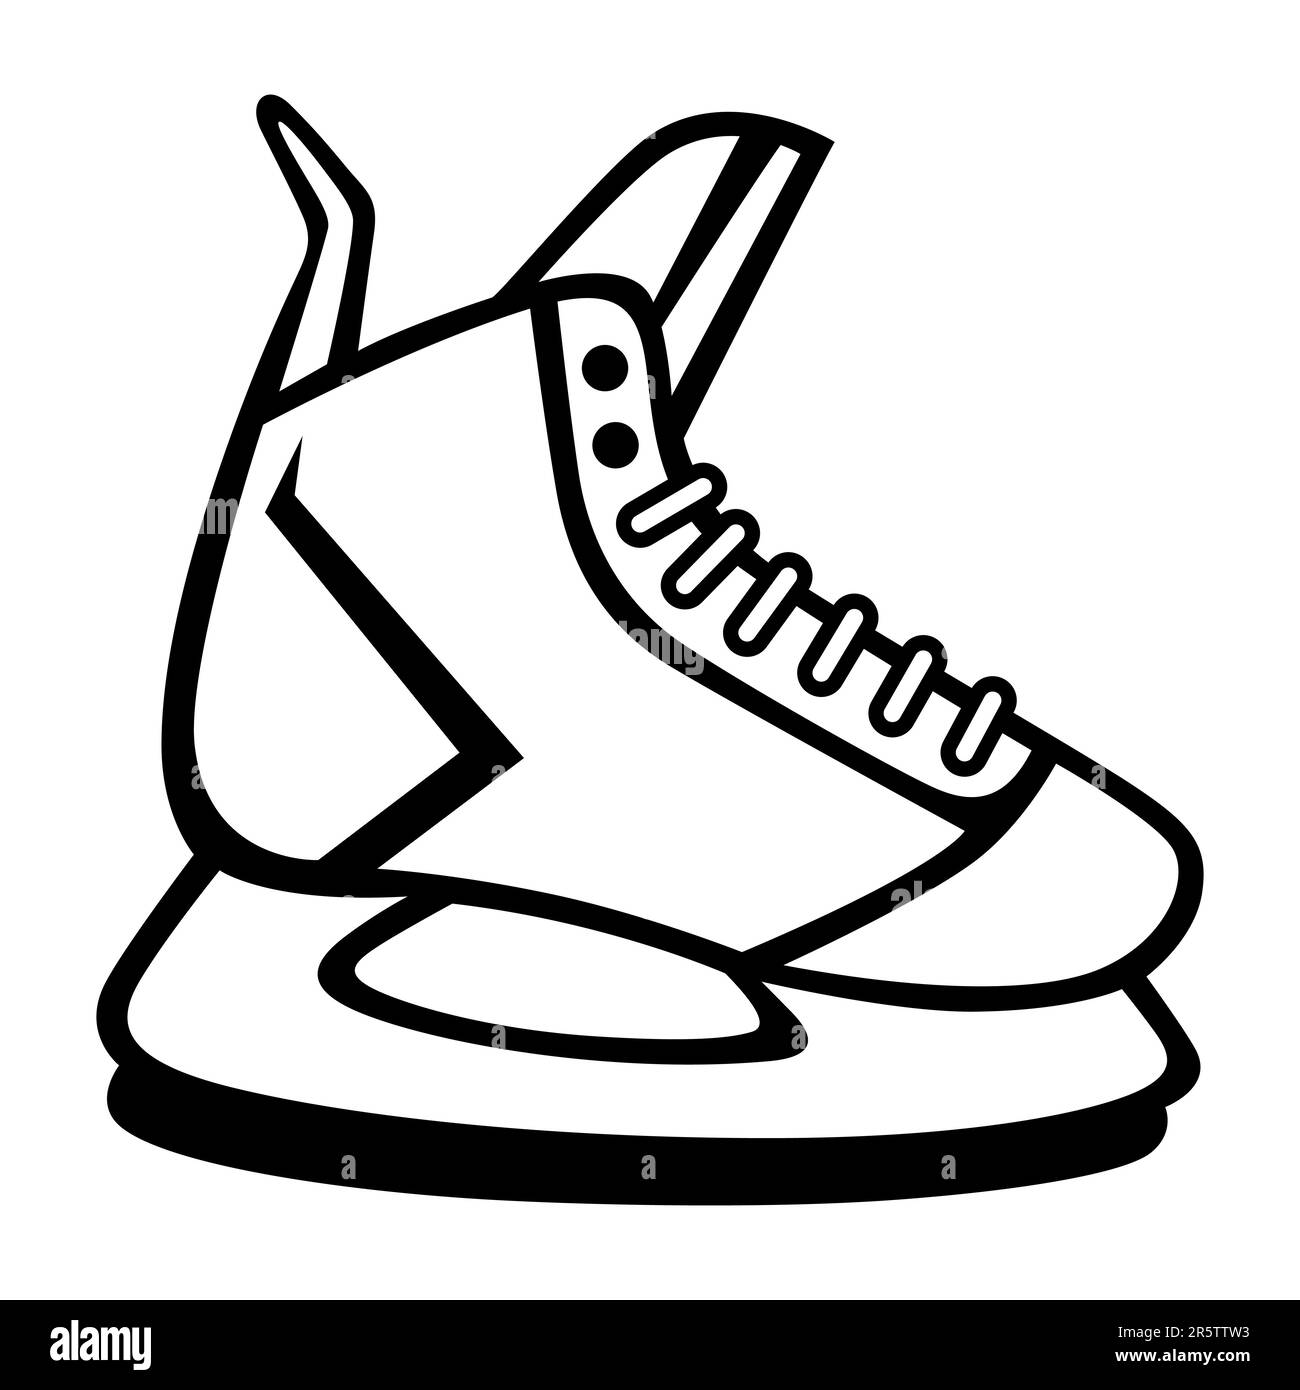 Hockey skate illustration. Sport club item or symbol. Healthy lifestyle object. Stock Vector